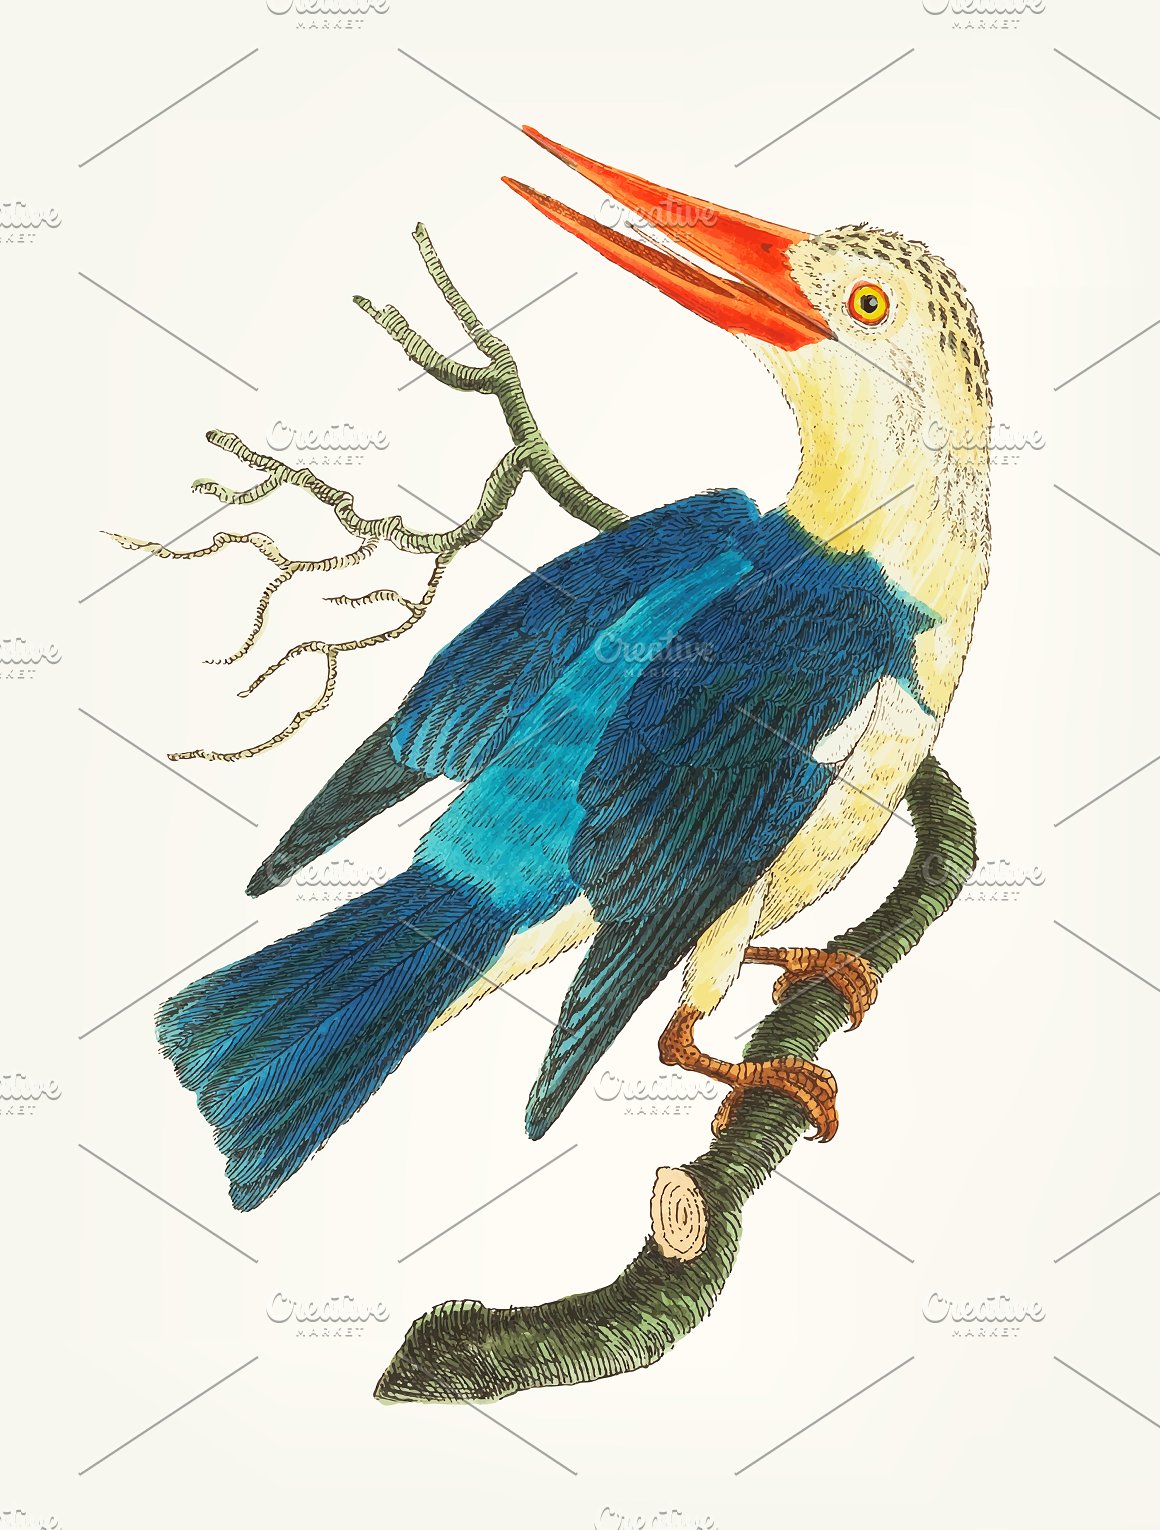 Multicolored bird on a branch.